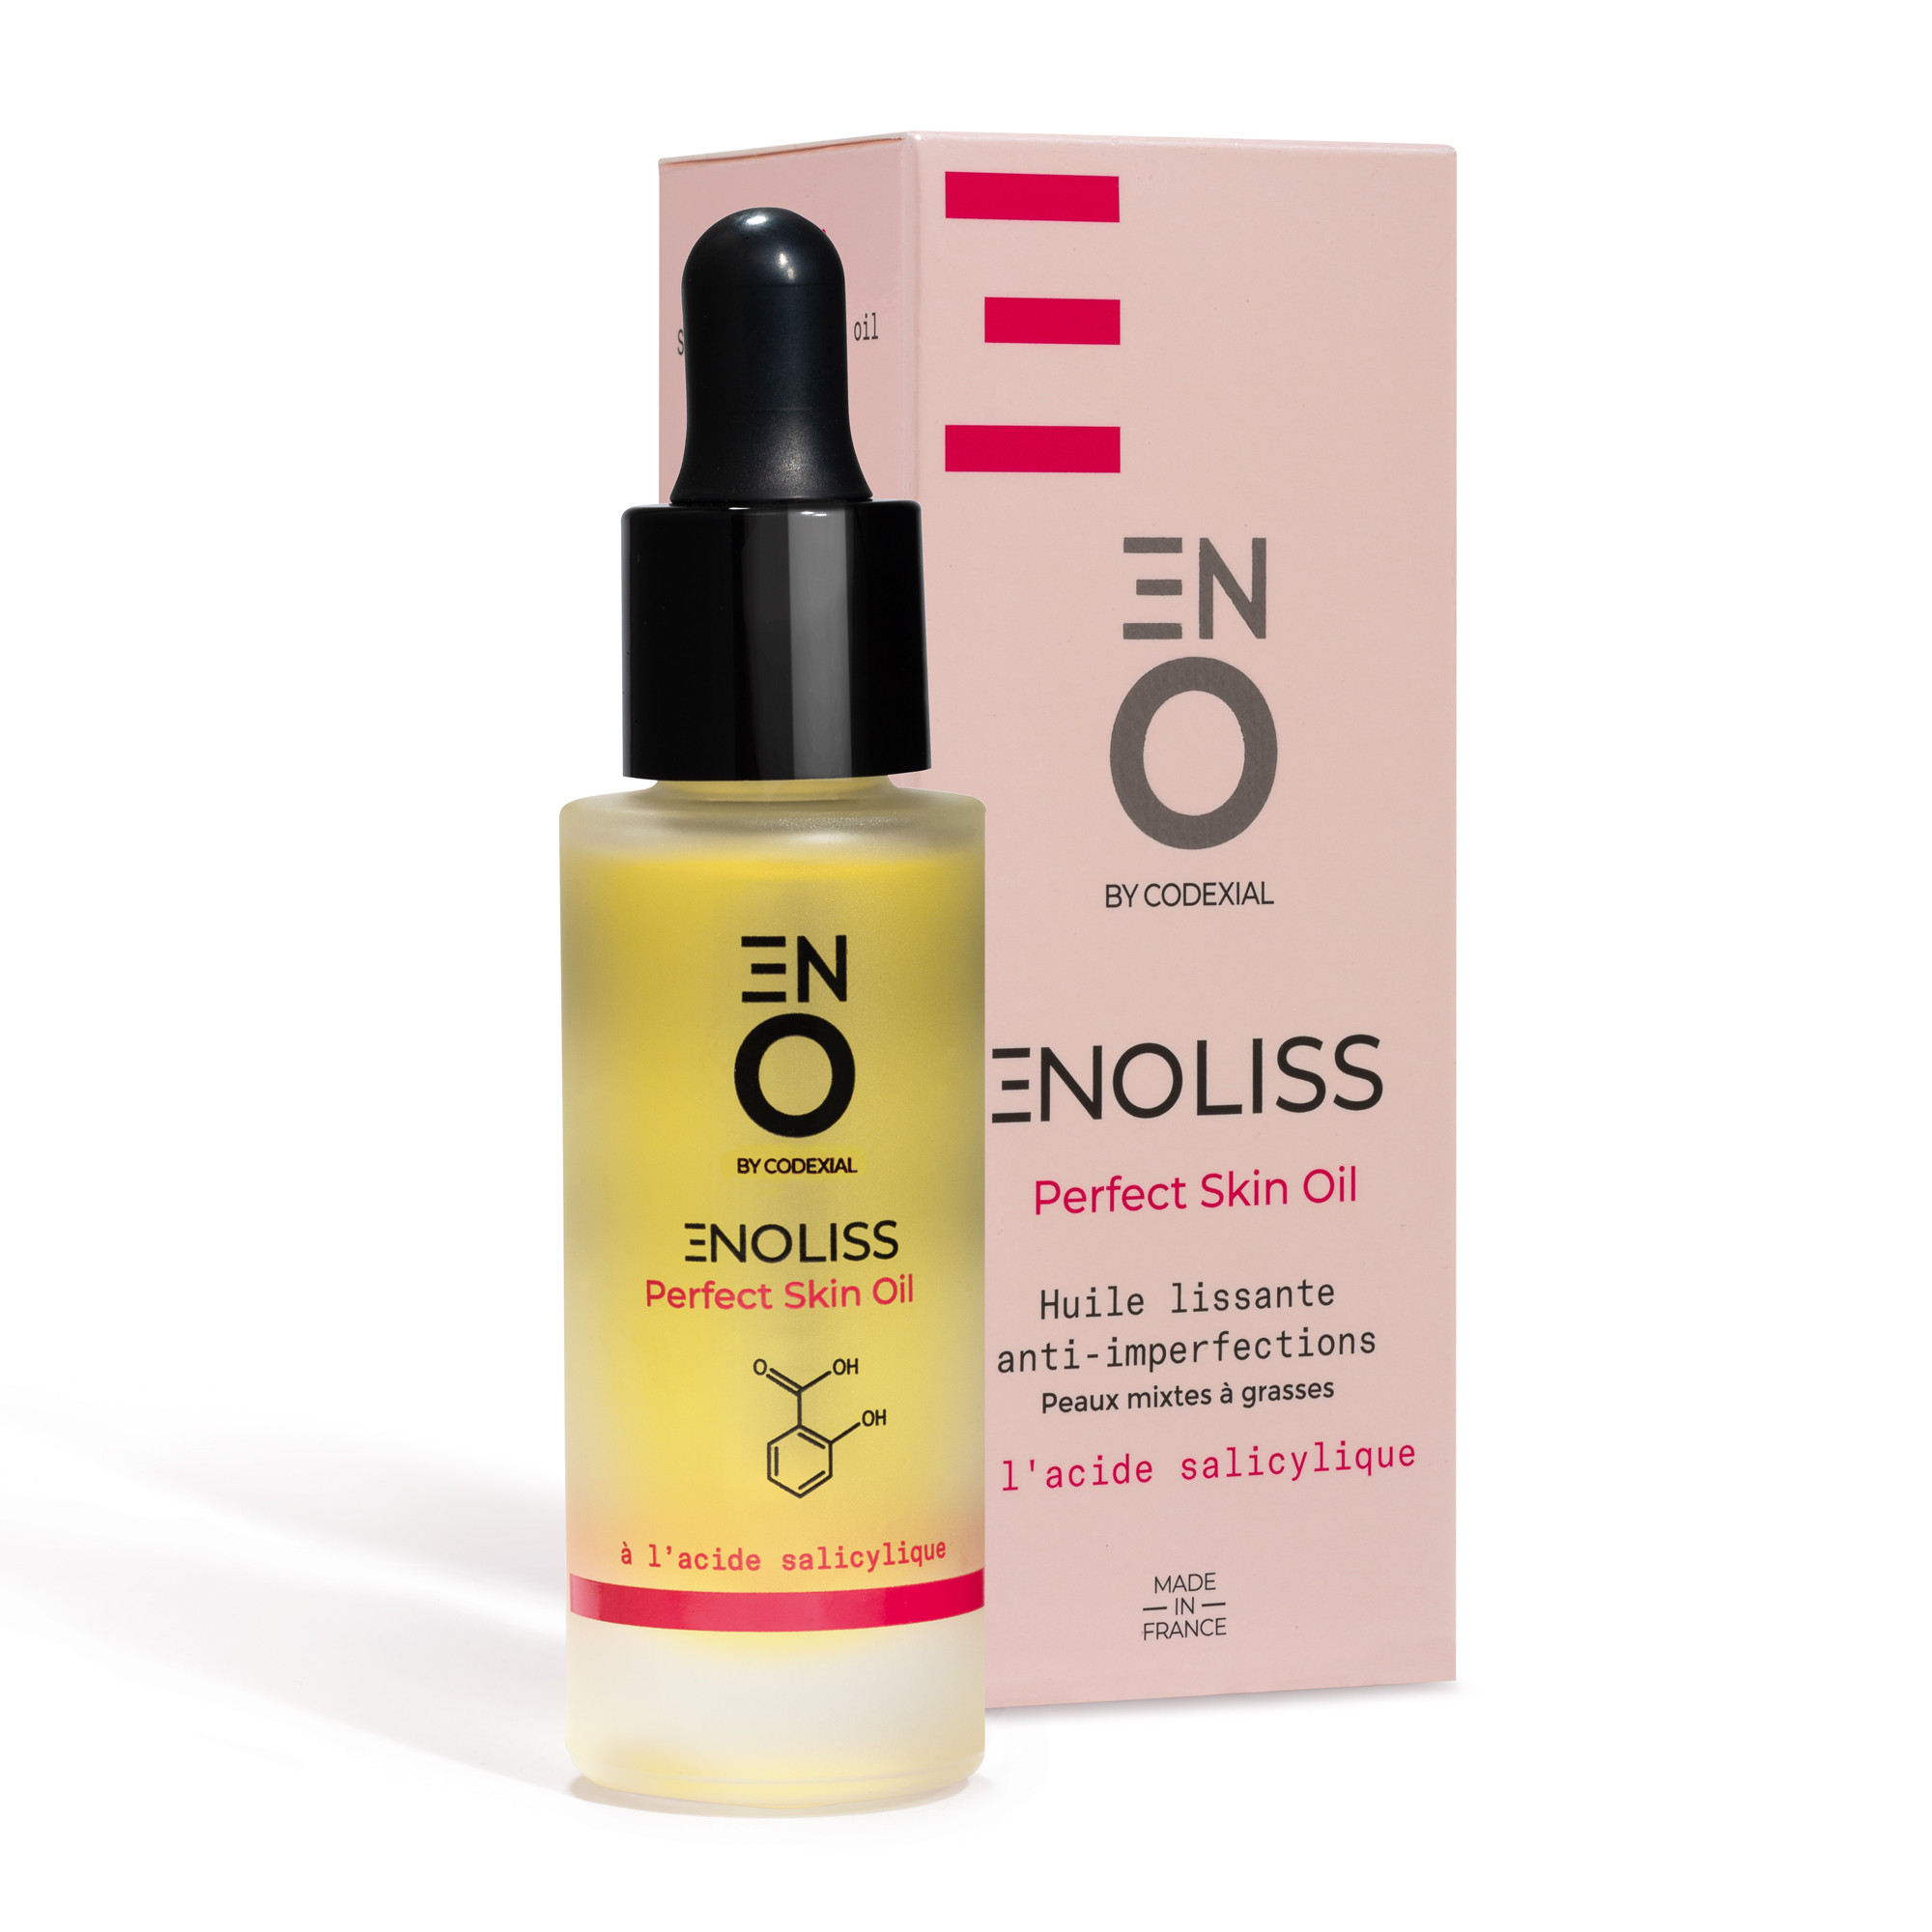 Enoliss Perfect Skin Oil-Image3